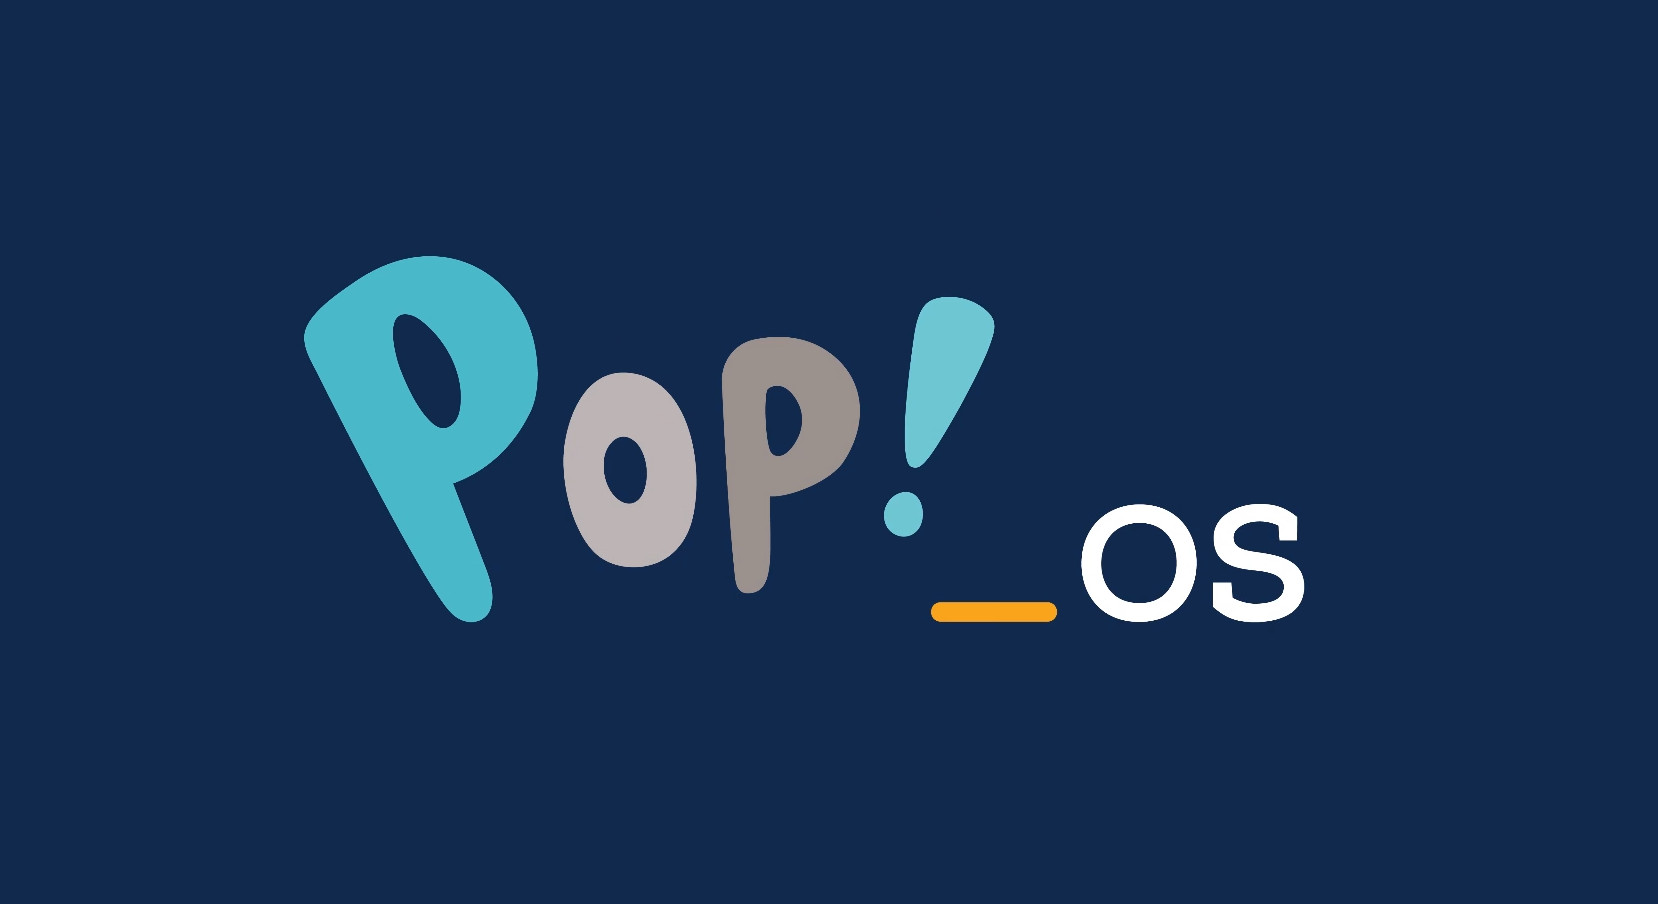 Pop OS Logo